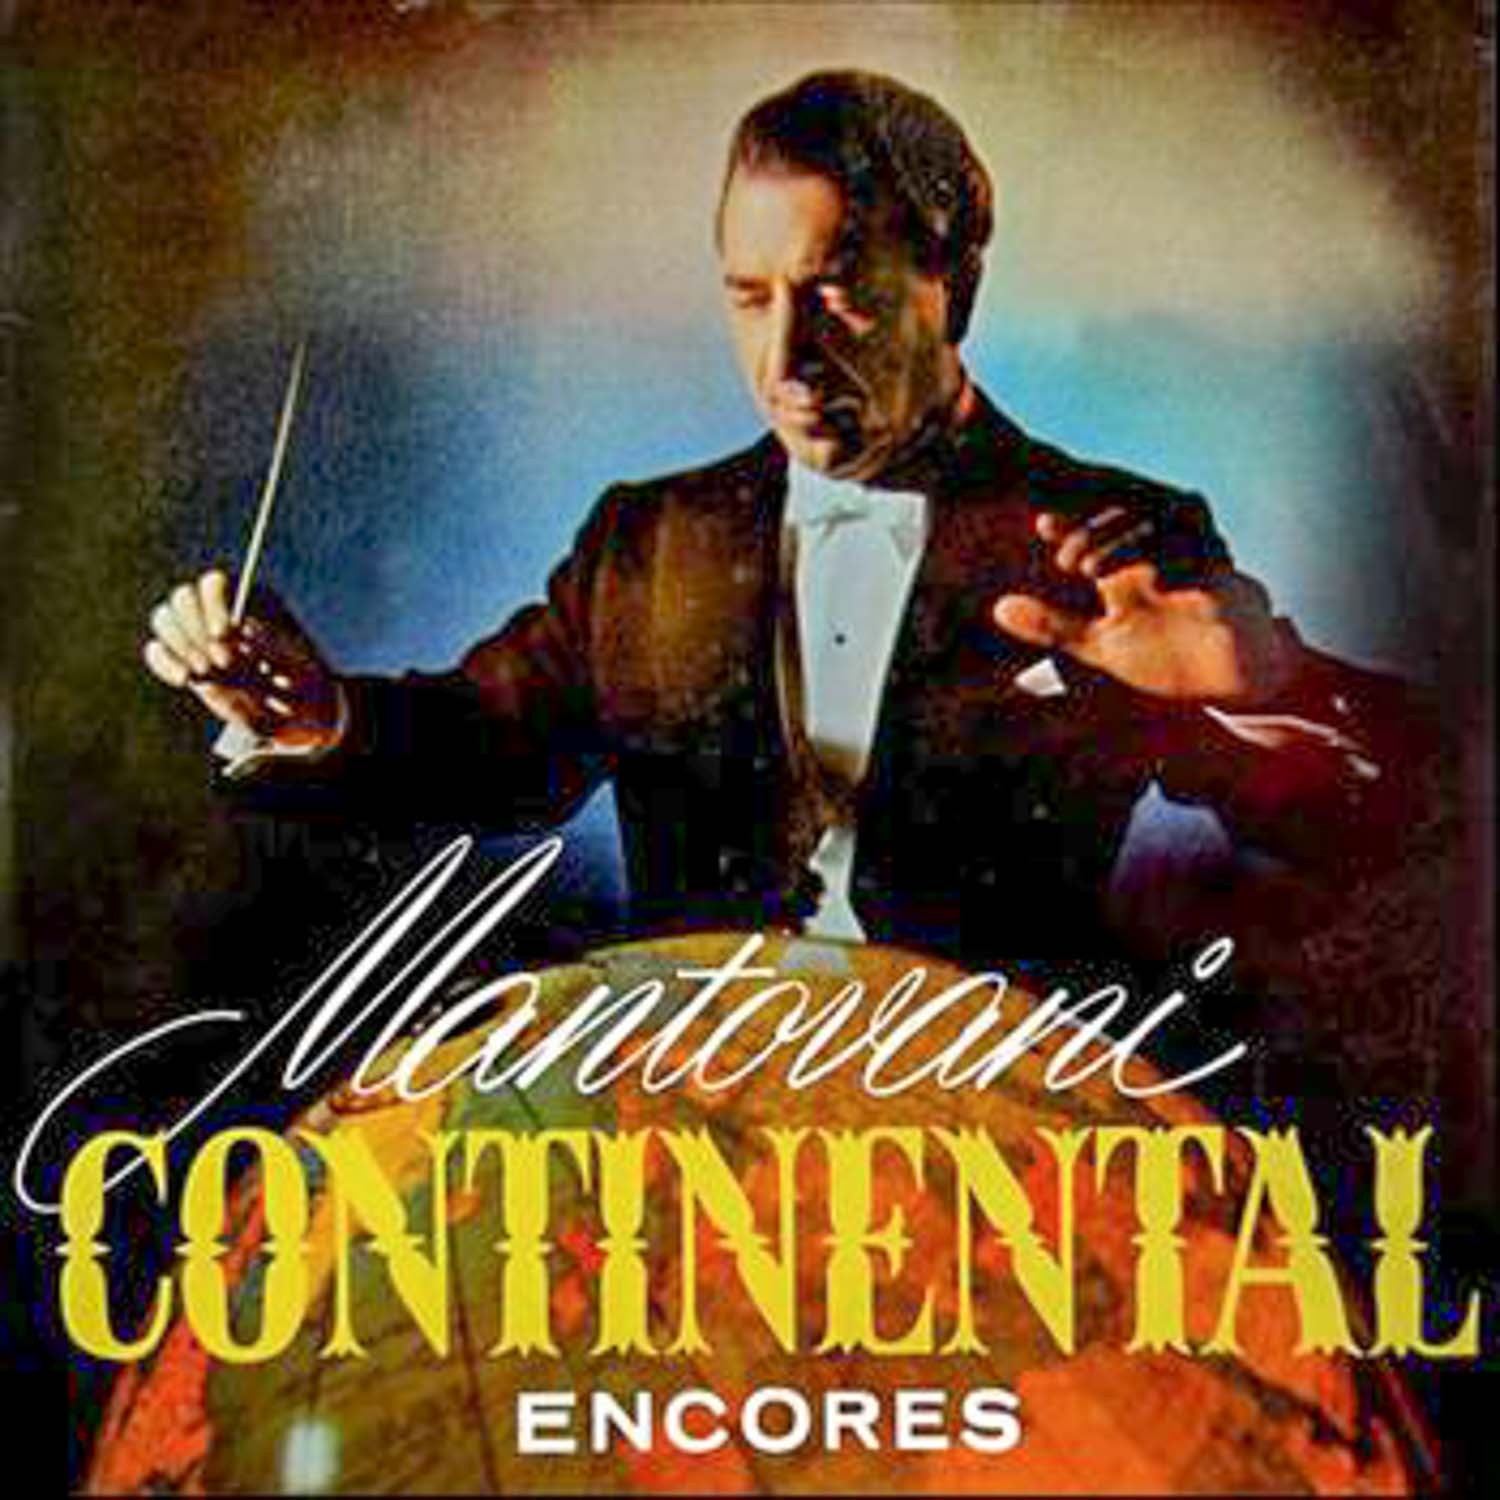 Mantovani and his Orchestra  Continental Encores (BLK 4297 - P)  *LP 12'' (Vinyl)*. 